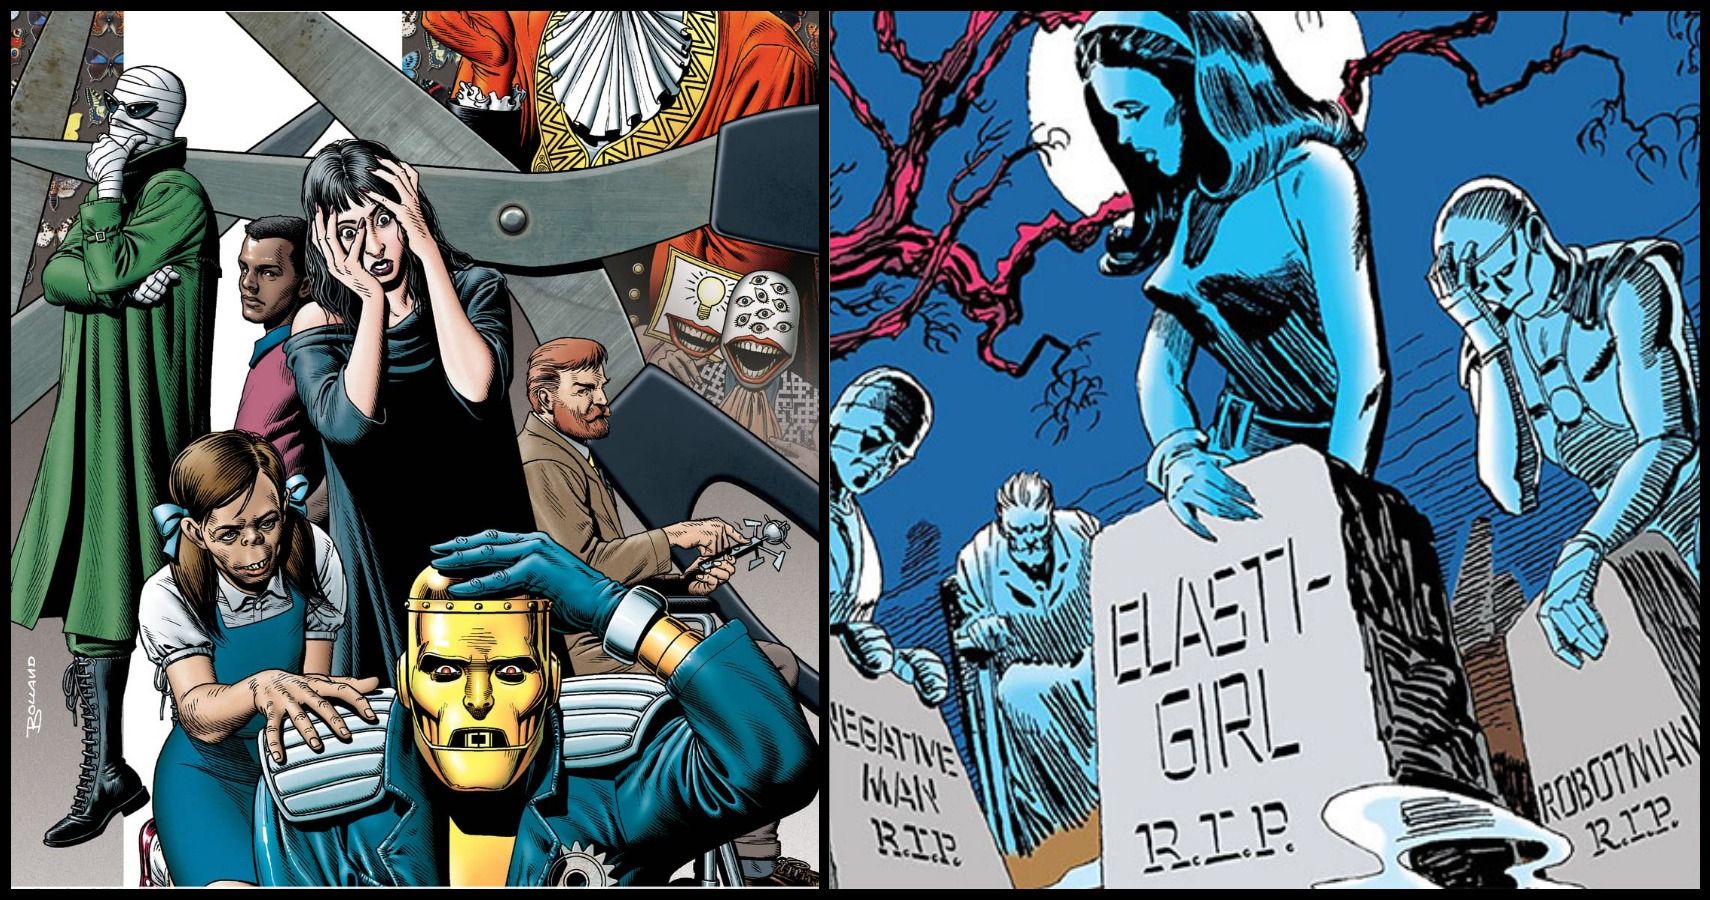 Doom Patrol: Robotman, Elasti-girl, Negative Man, The Chief Niles Caulder, Crazy Jane, Dorothy Spinner.